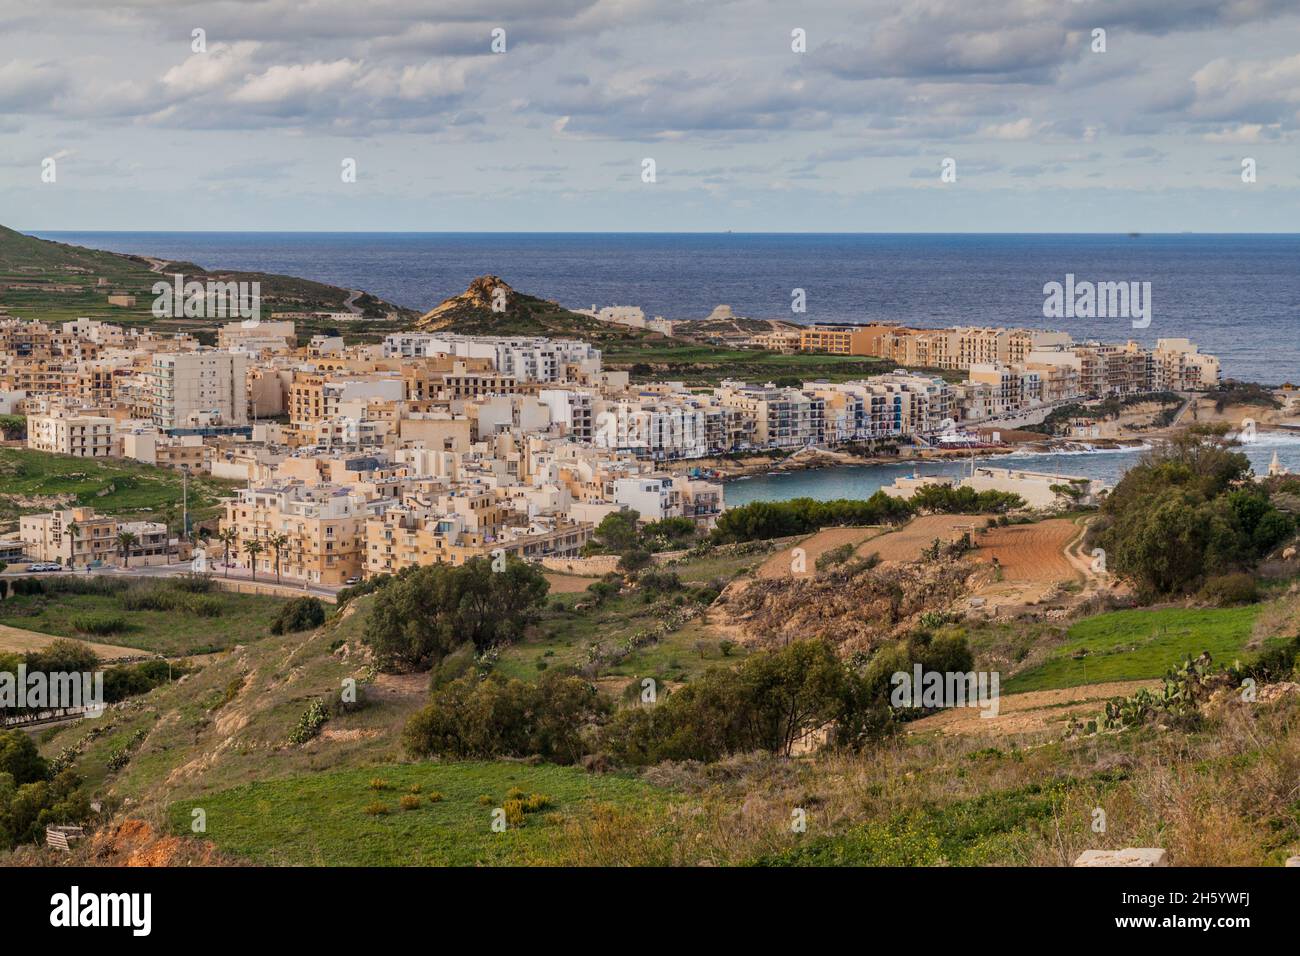 Aerial view of Marsalforn on Gozo island, Malta Stock Photo